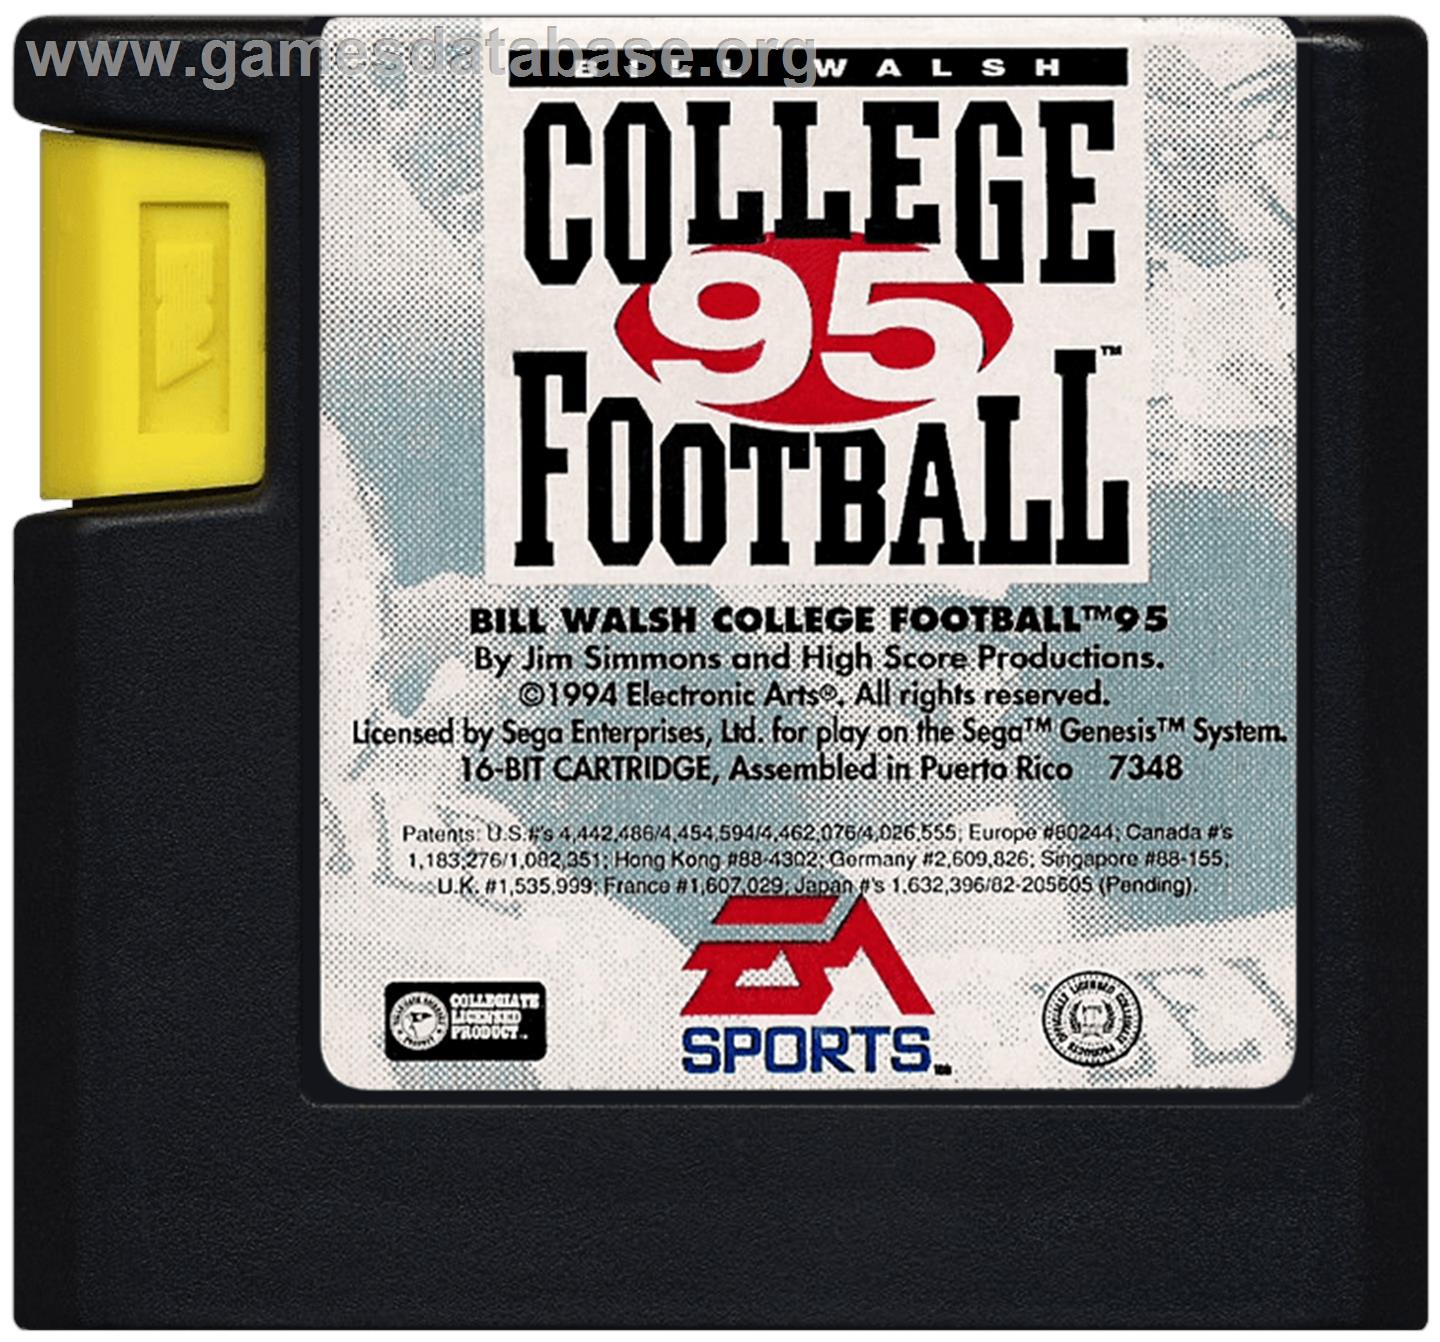 Bill Walsh College Football 95 - Sega Genesis - Artwork - Cartridge